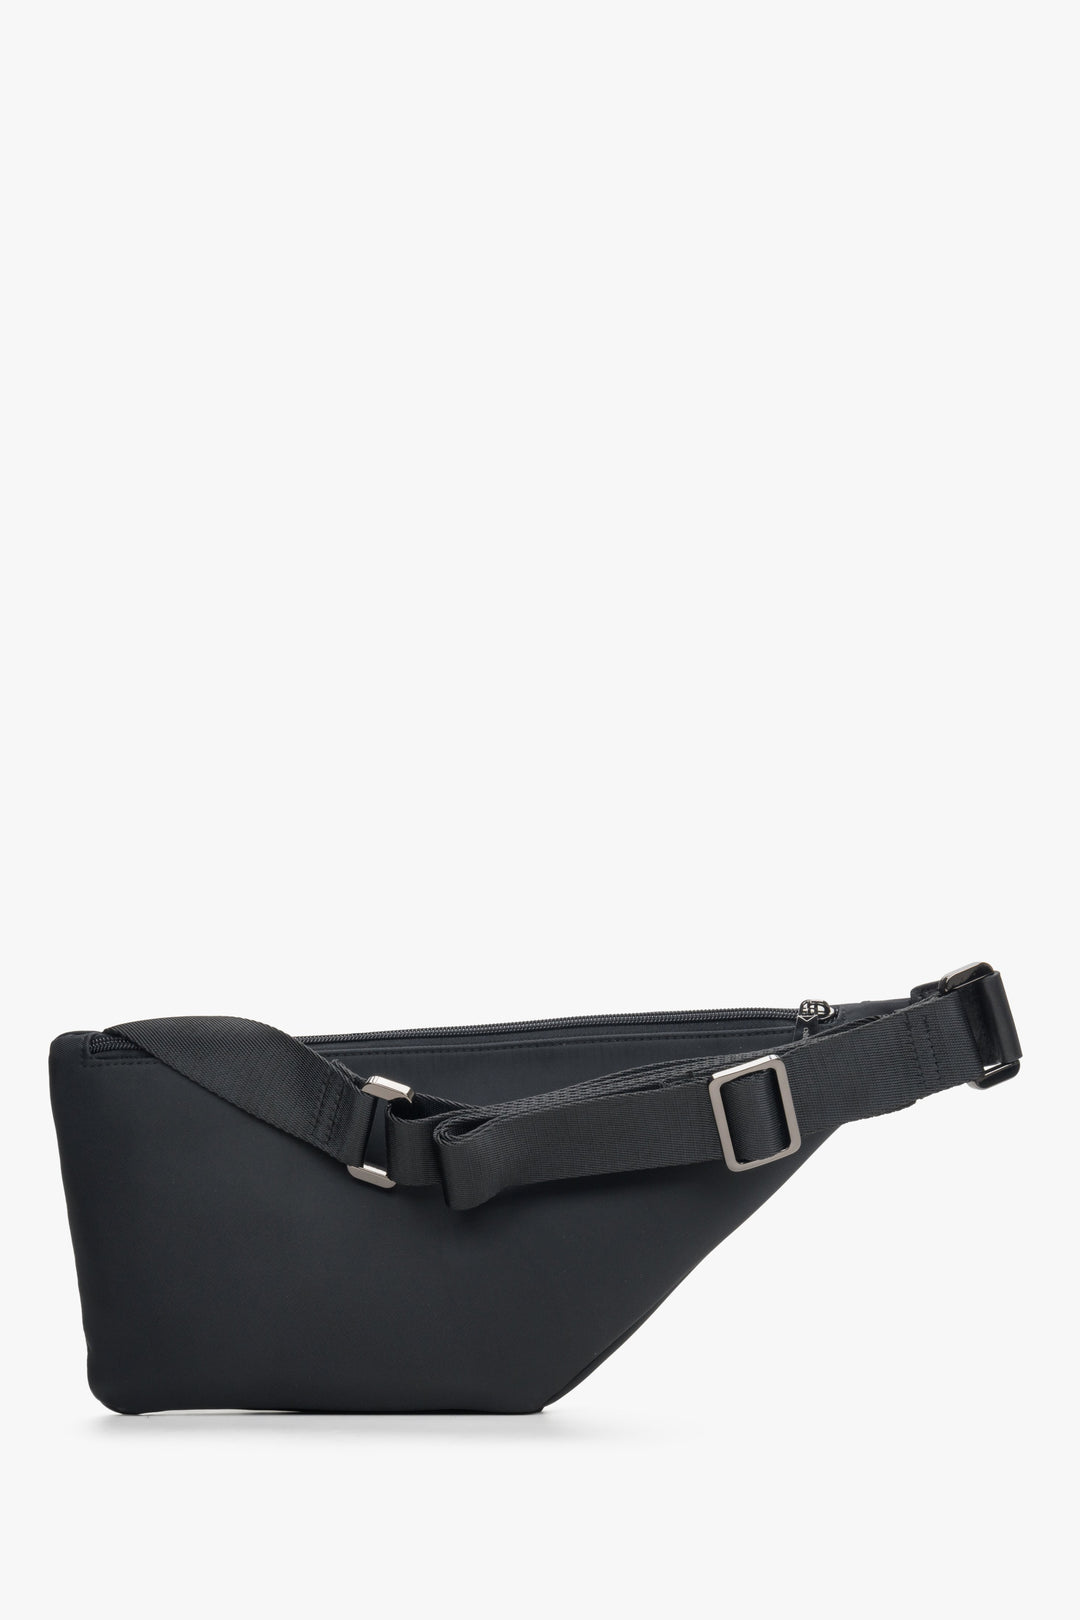 Men's black spacious waist bag by Estro - reverse side.